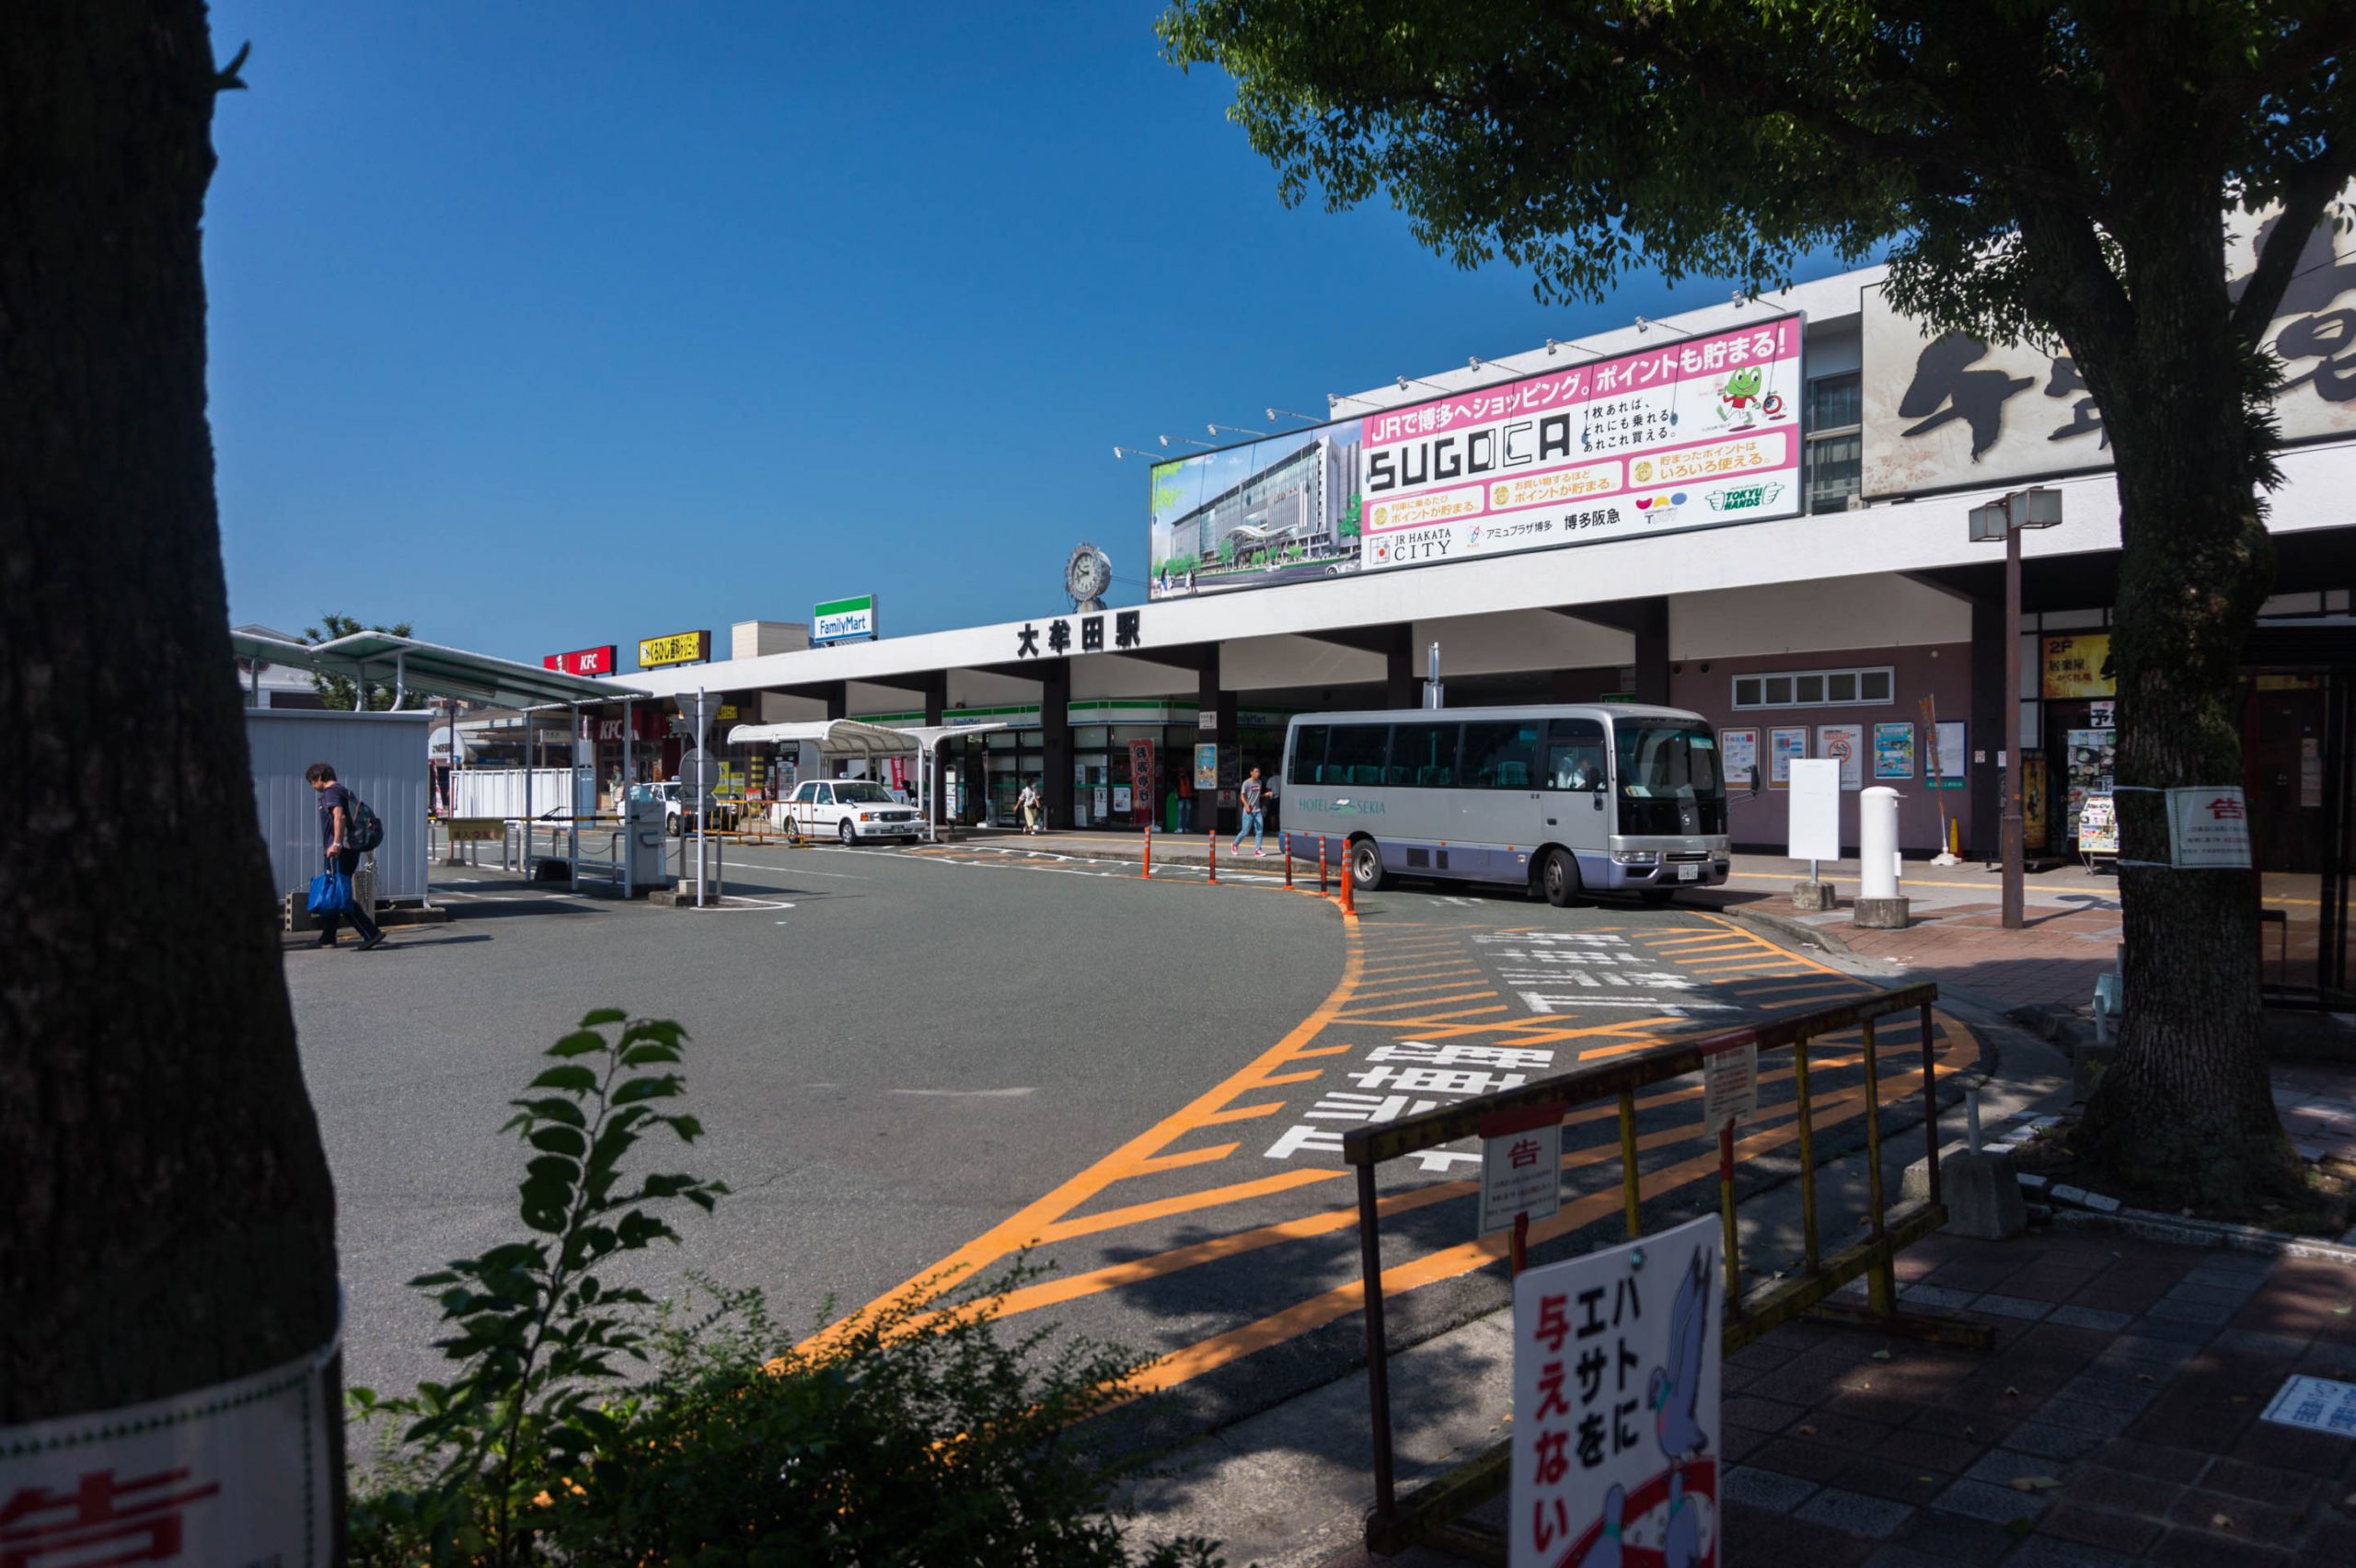 JR Omuta Station